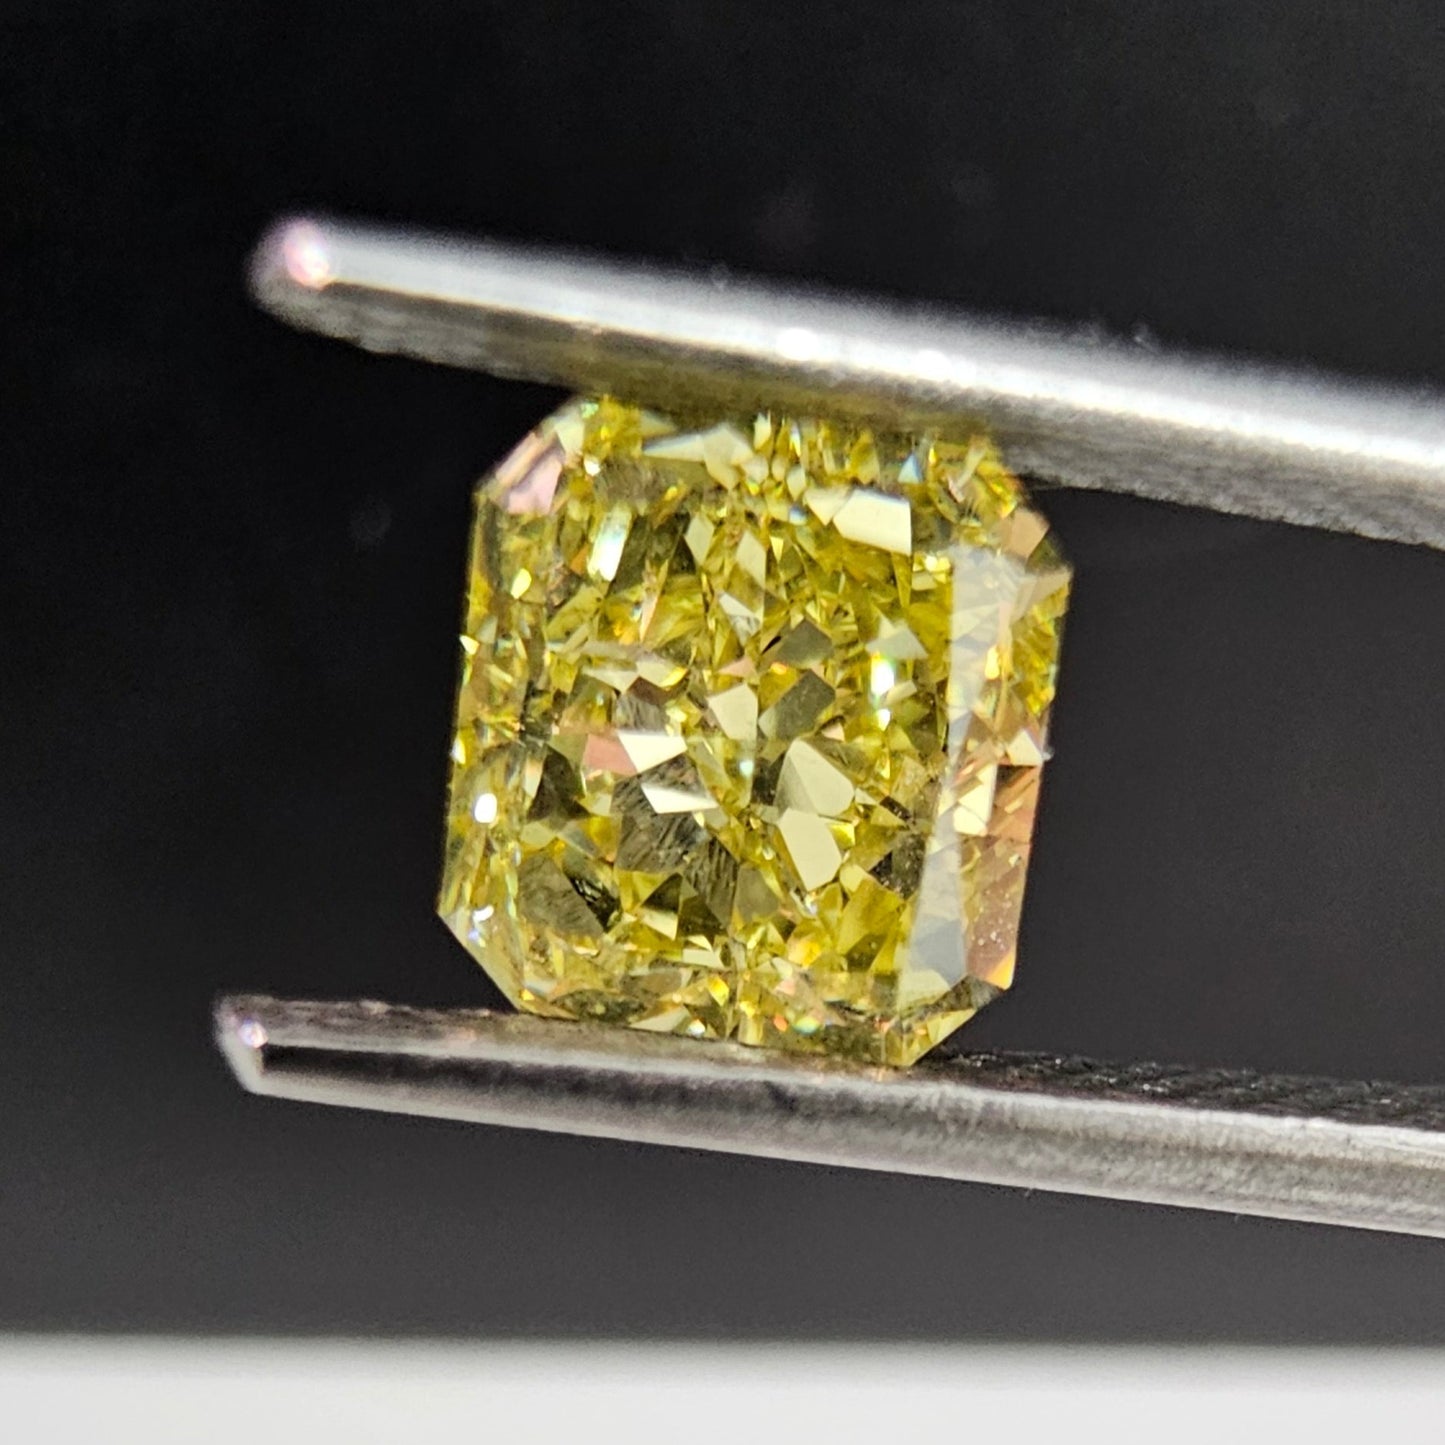 1.18 Carat Radiant Cut Diamond  GIA Certified Diamond  Fancy Intense Yellow  SI1 Clarity 